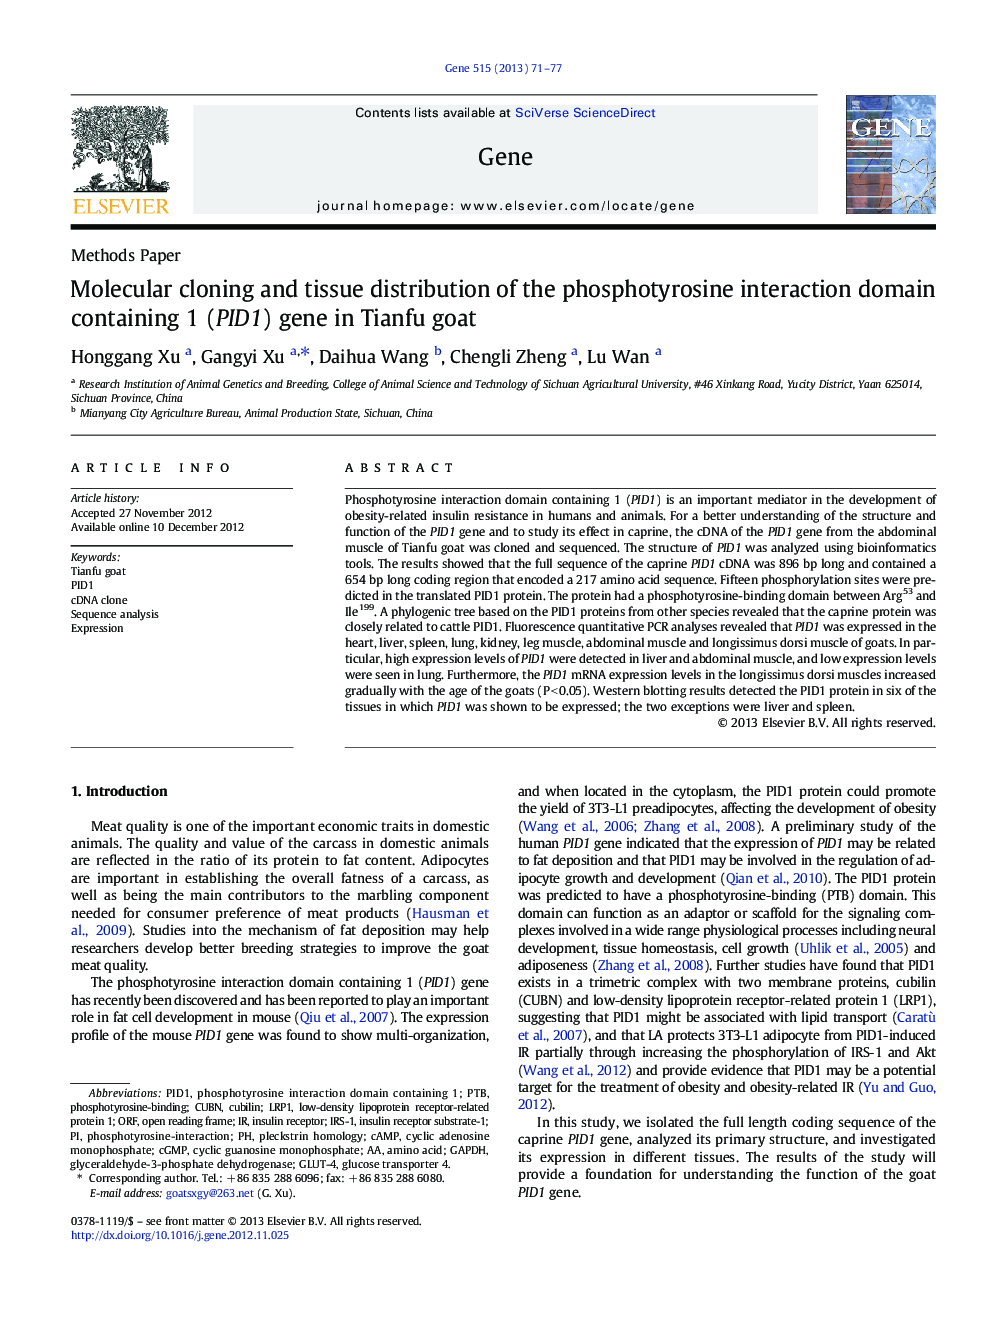 Molecular cloning and tissue distribution of the phosphotyrosine interaction domain containing 1 (PID1) gene in Tianfu goat